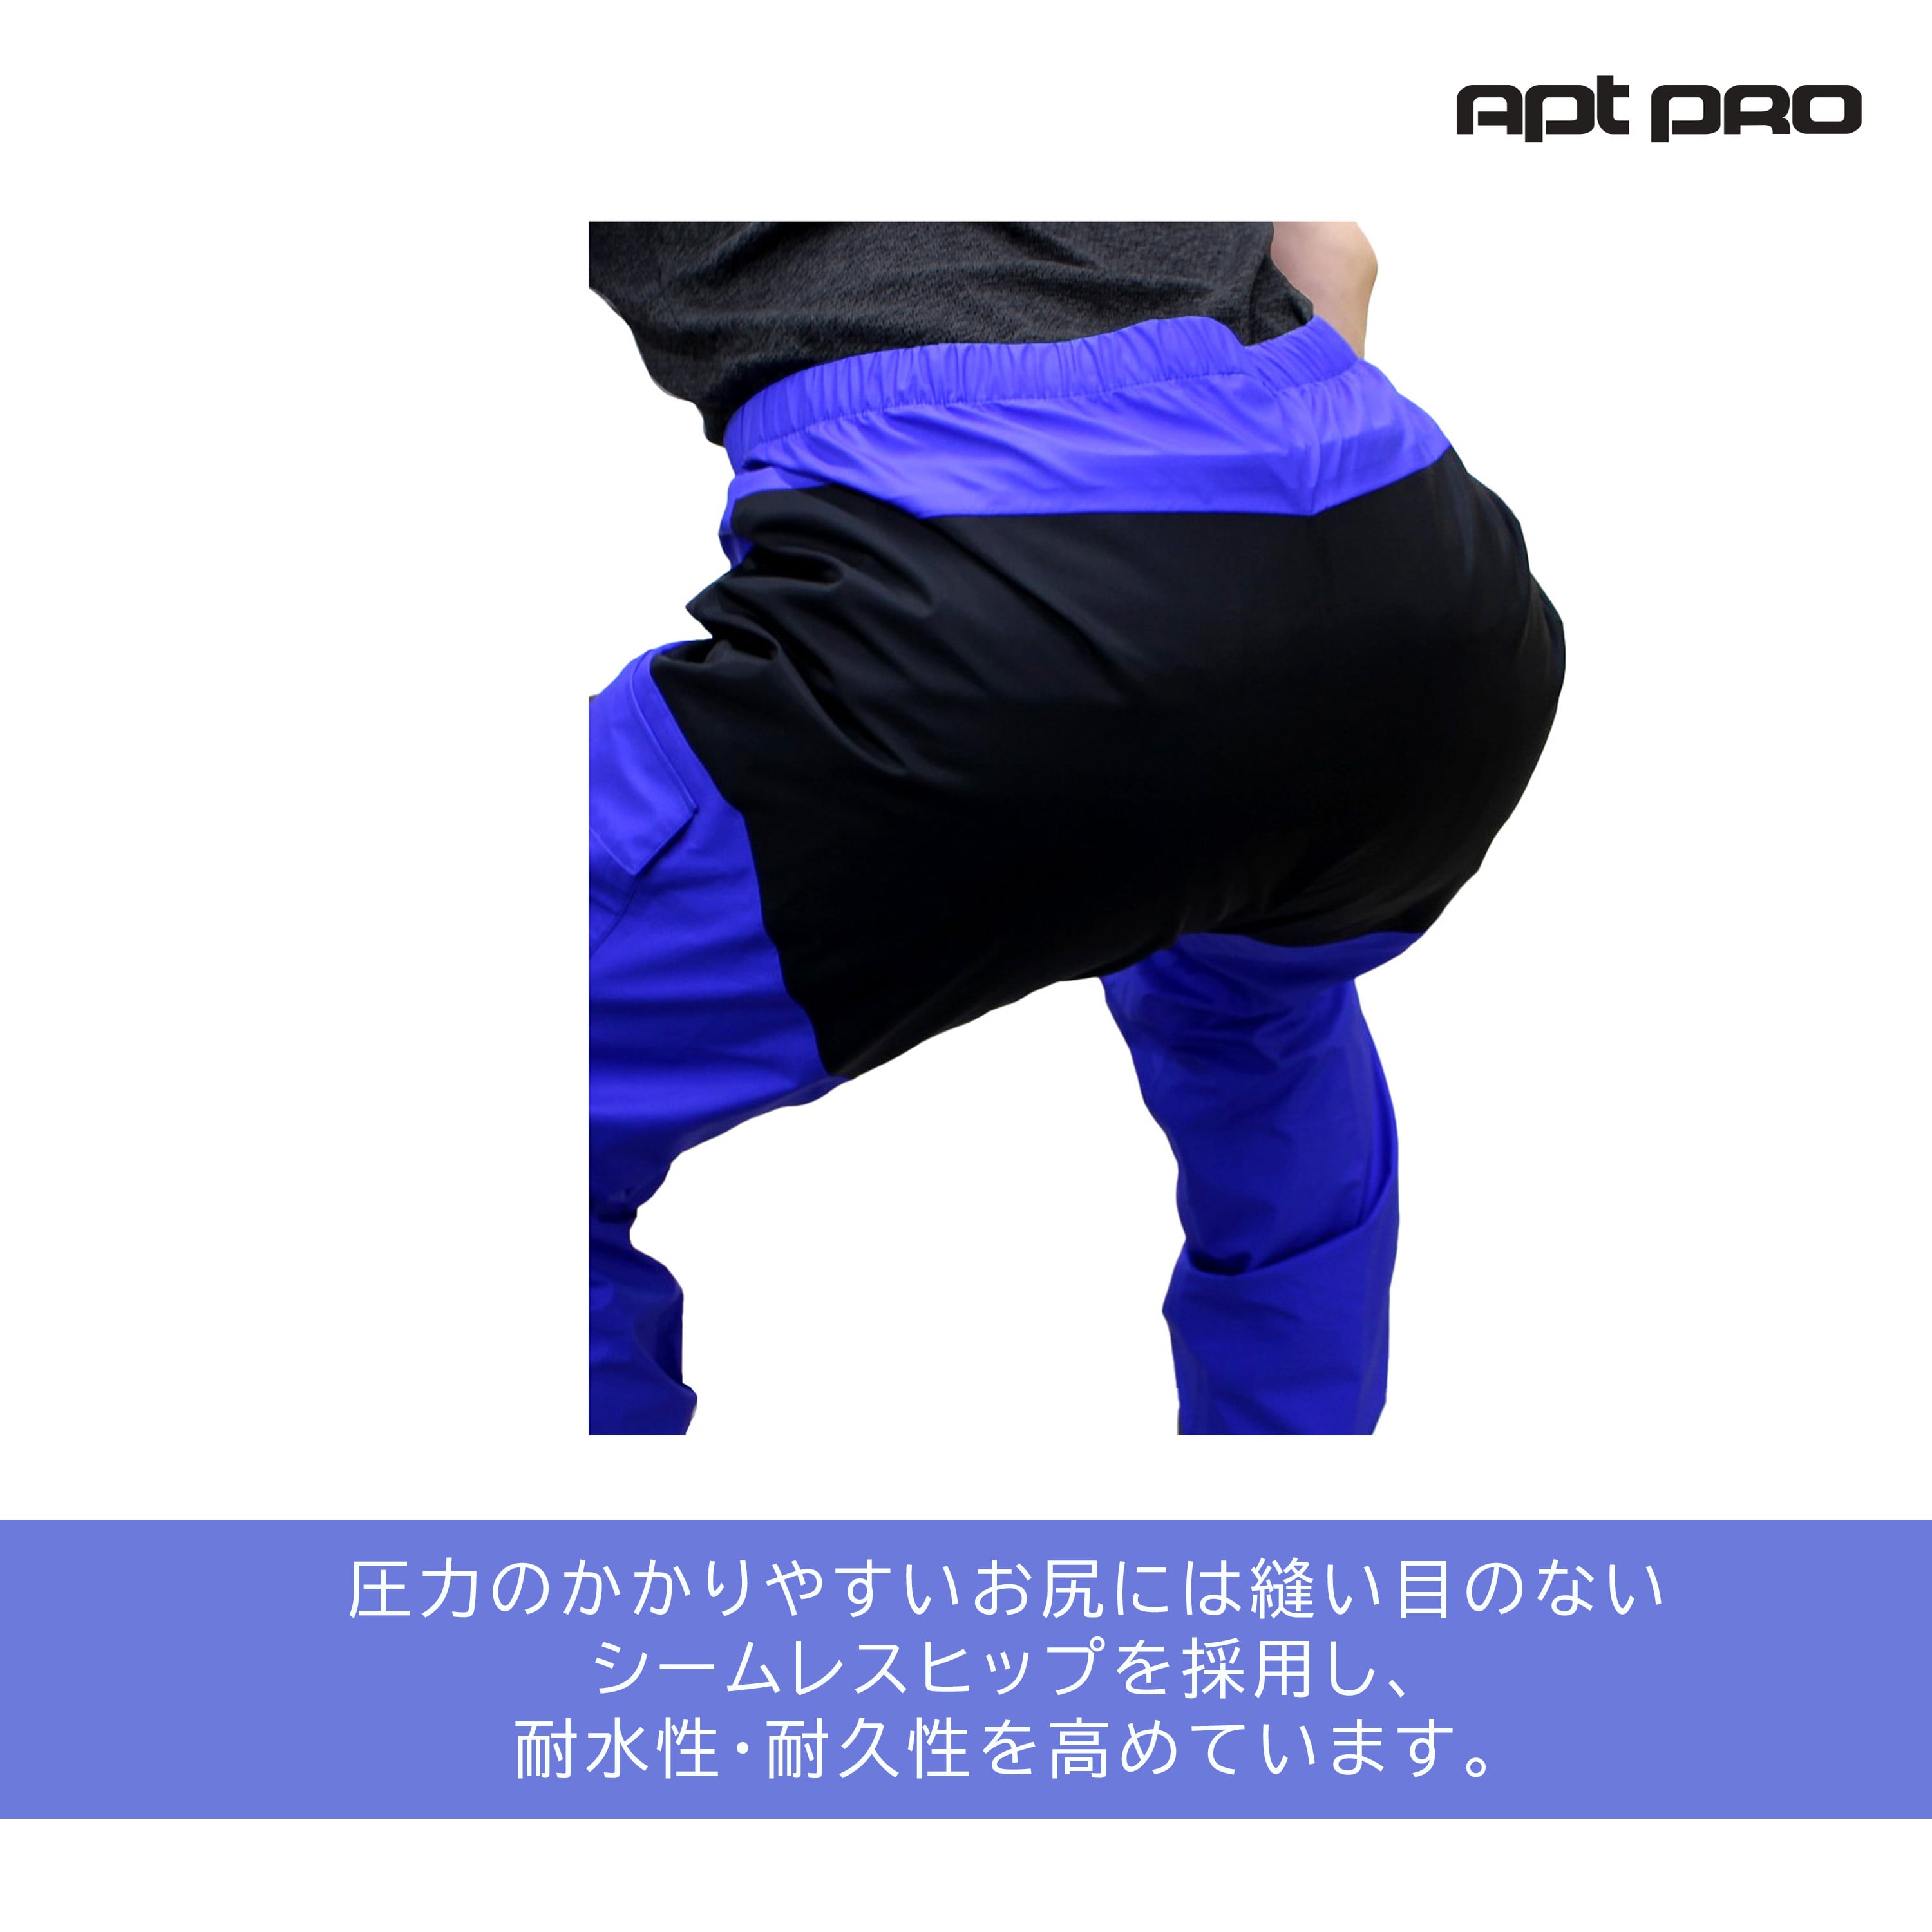 APt Pro] AP950 フルハーネスV型対応レインパンツ | Maegaki Rain Wear